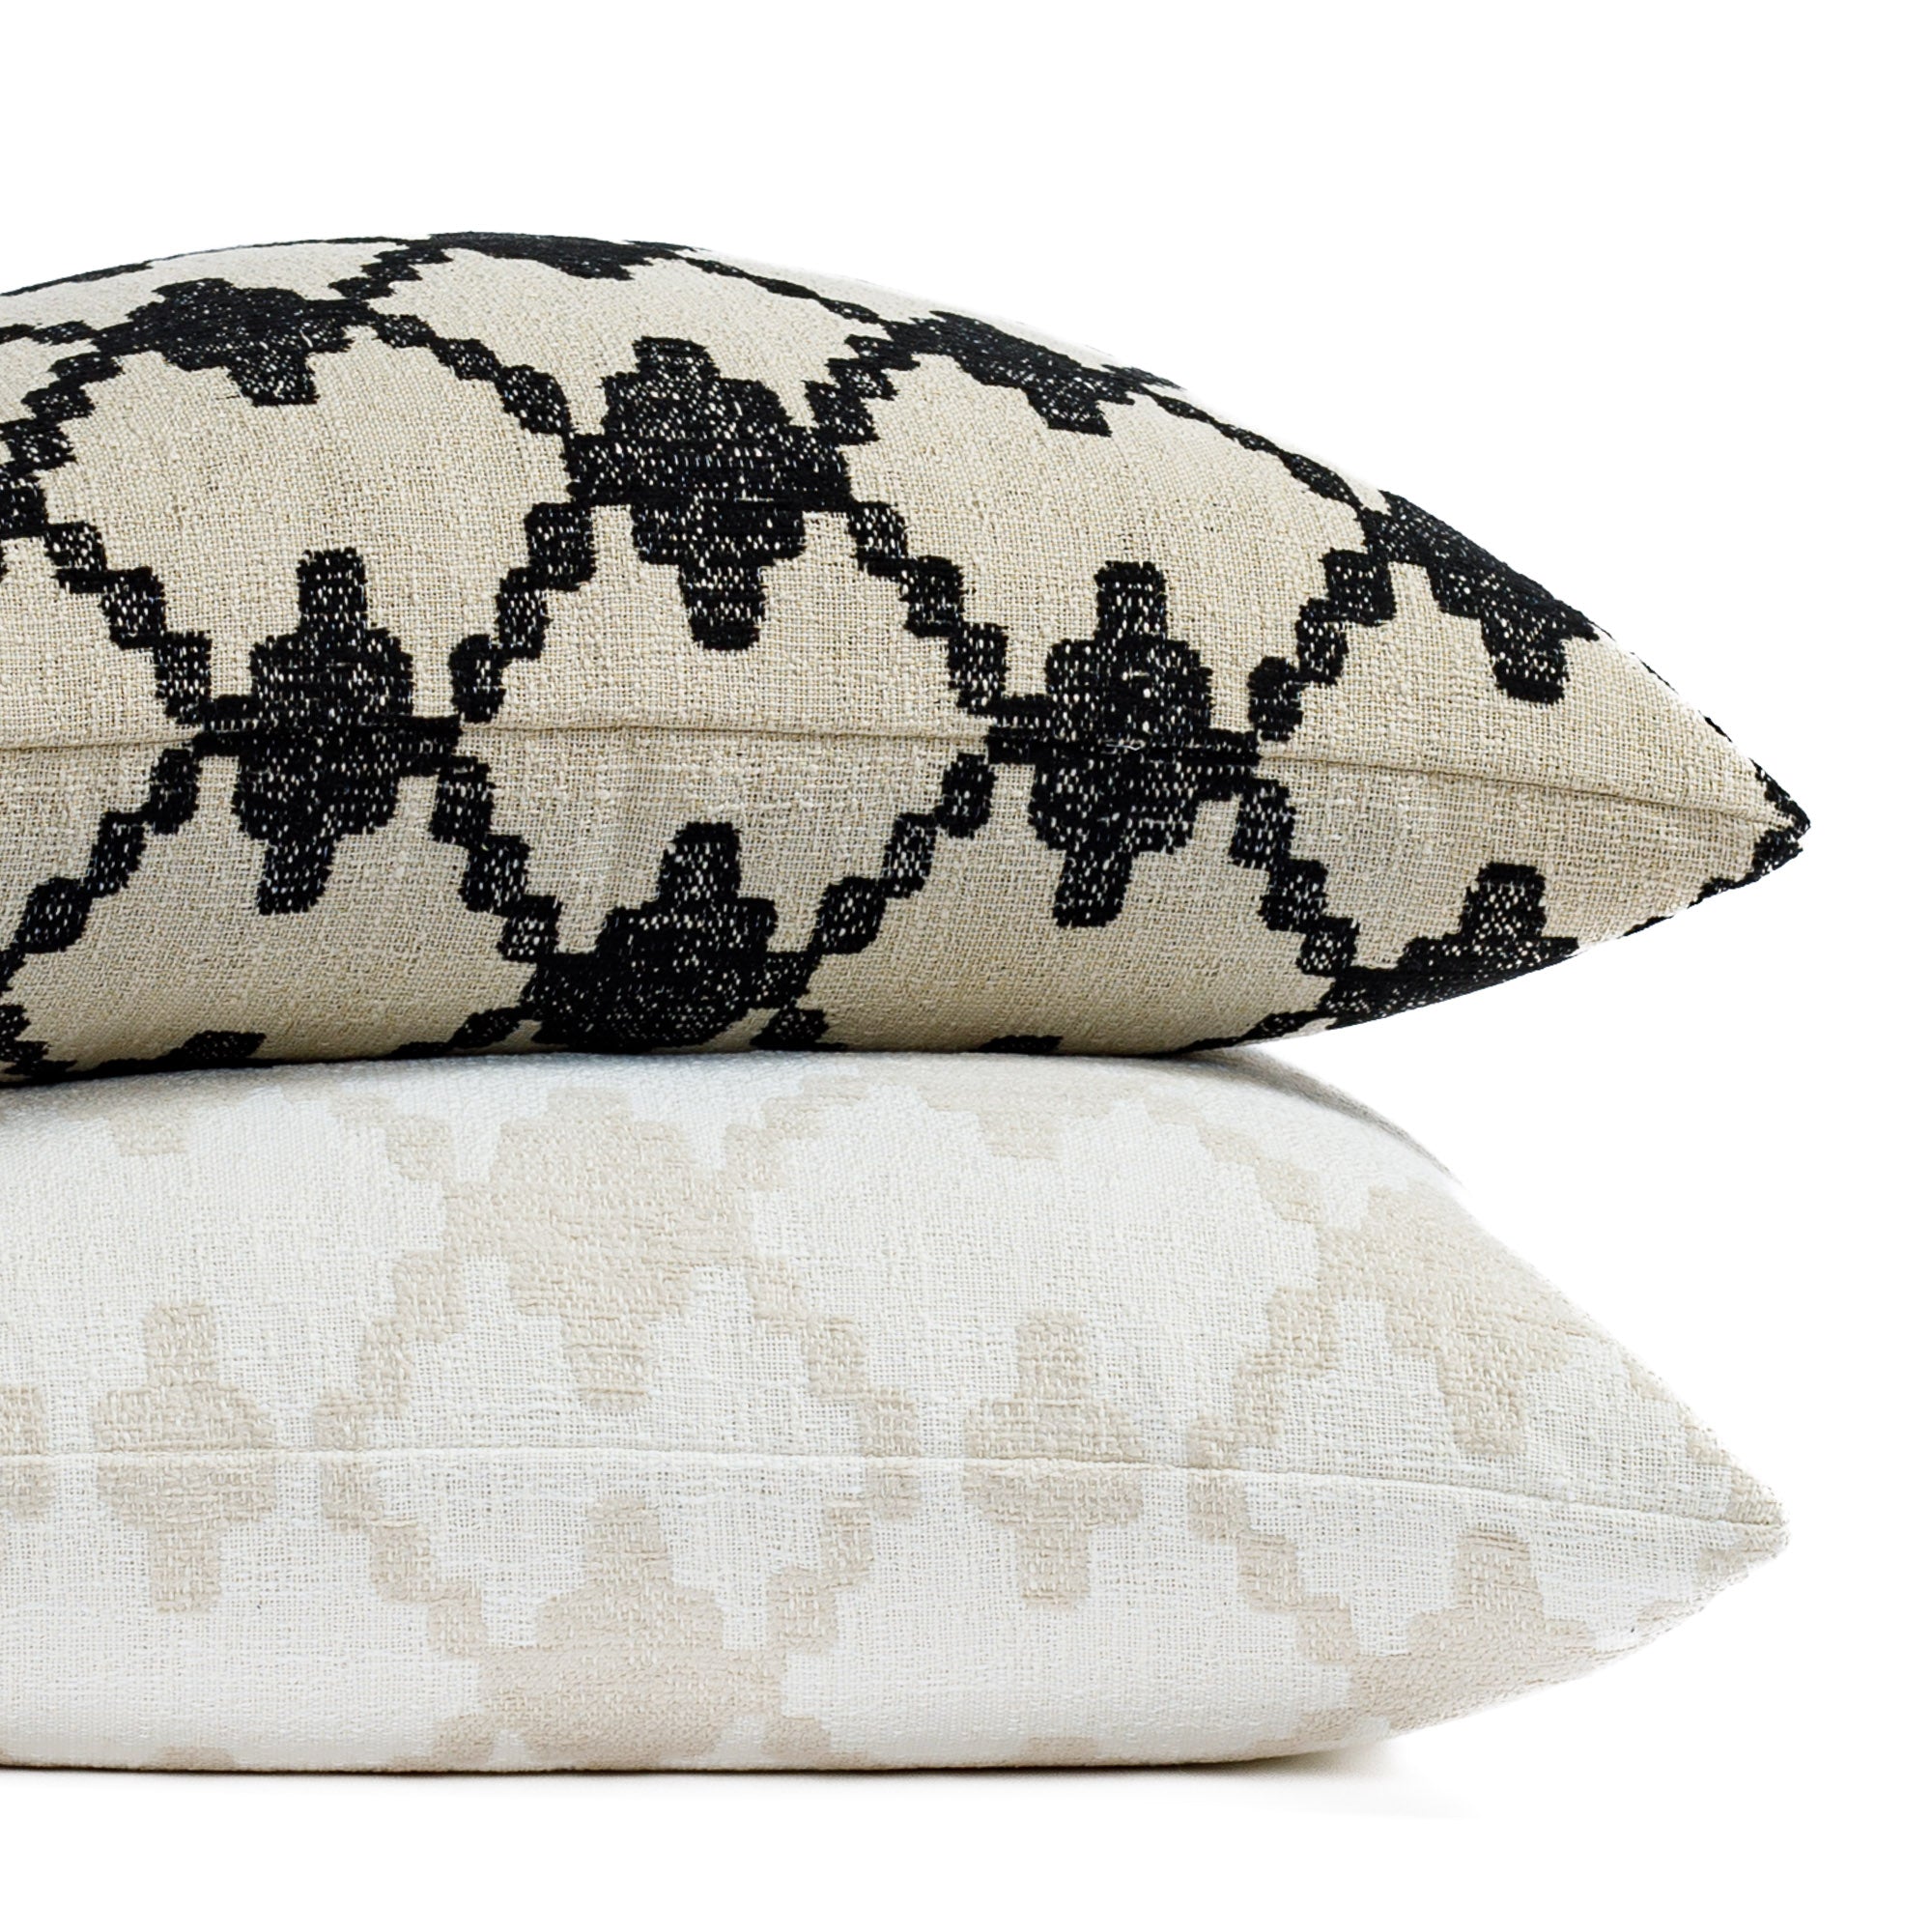 Fez diamond trellis global patterned pillows in two neutral colourways